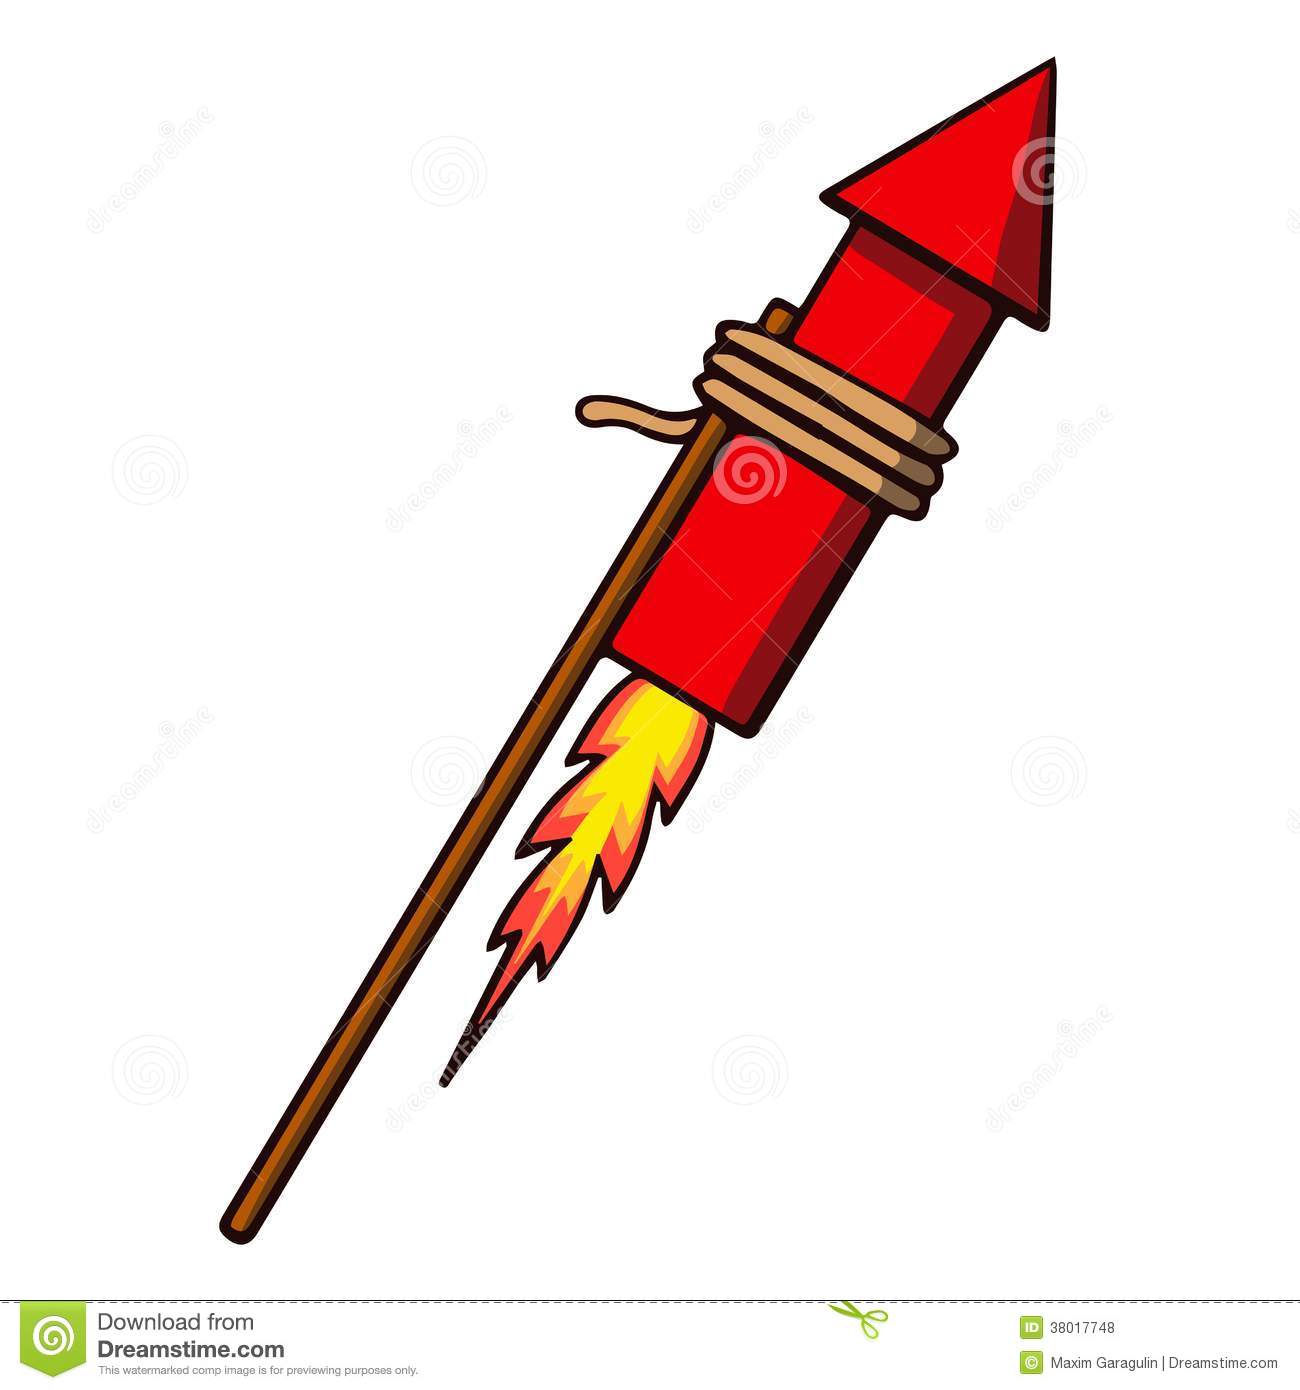 Firework Rocket  Vector Illustration Royalty Free Stock Photos   Image